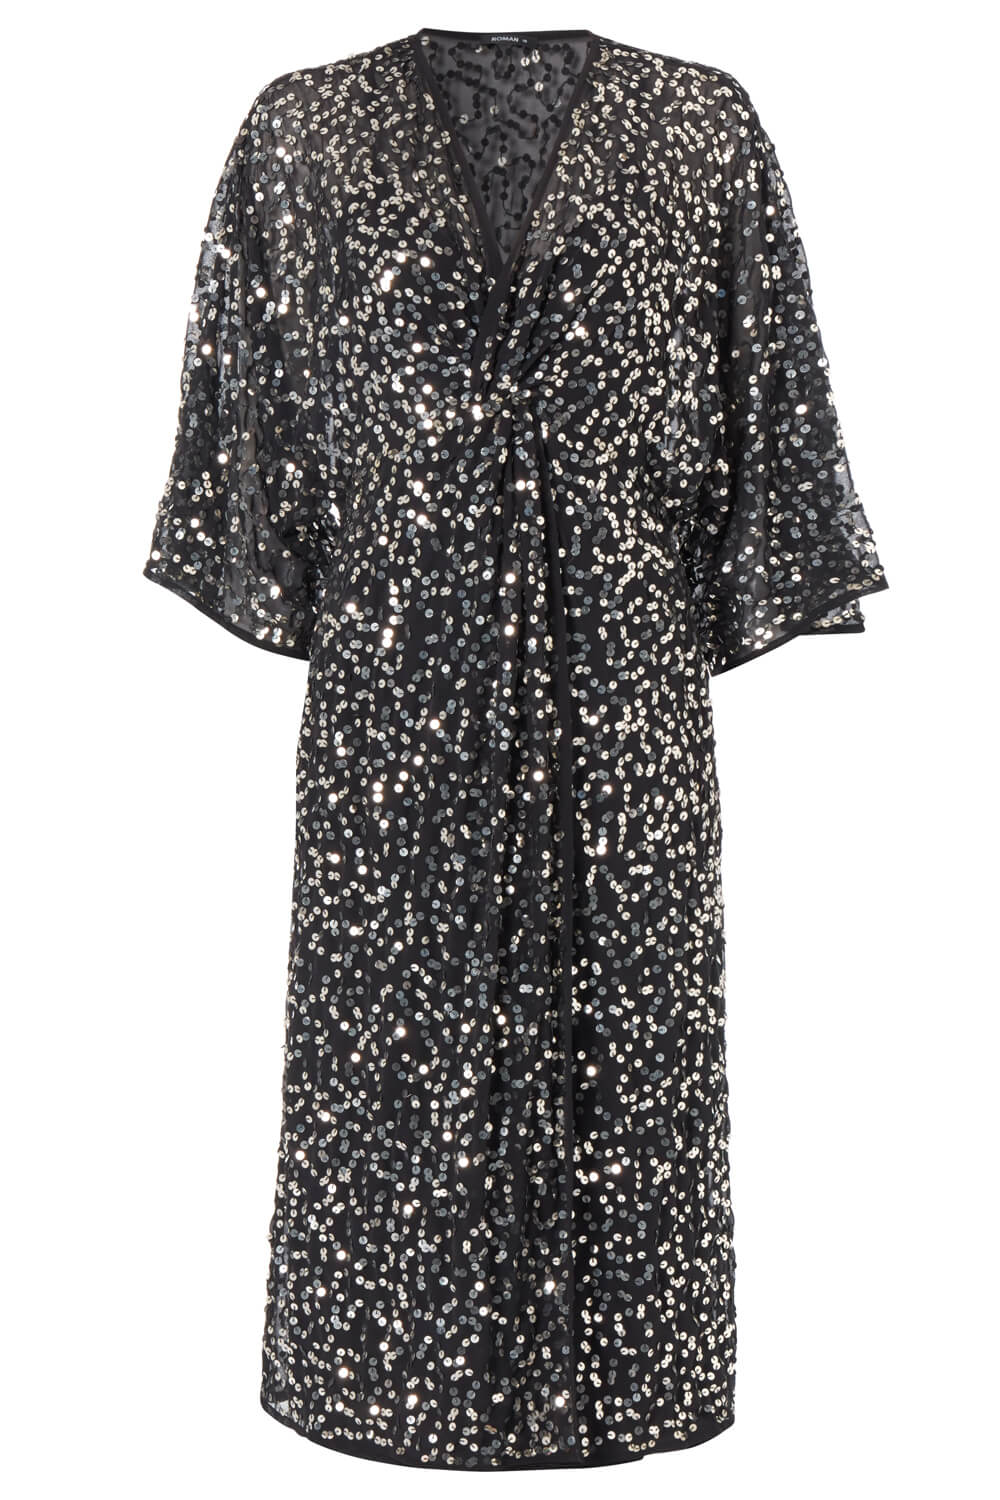 Black Twist Front Sequin Midi Dress, Image 4 of 4